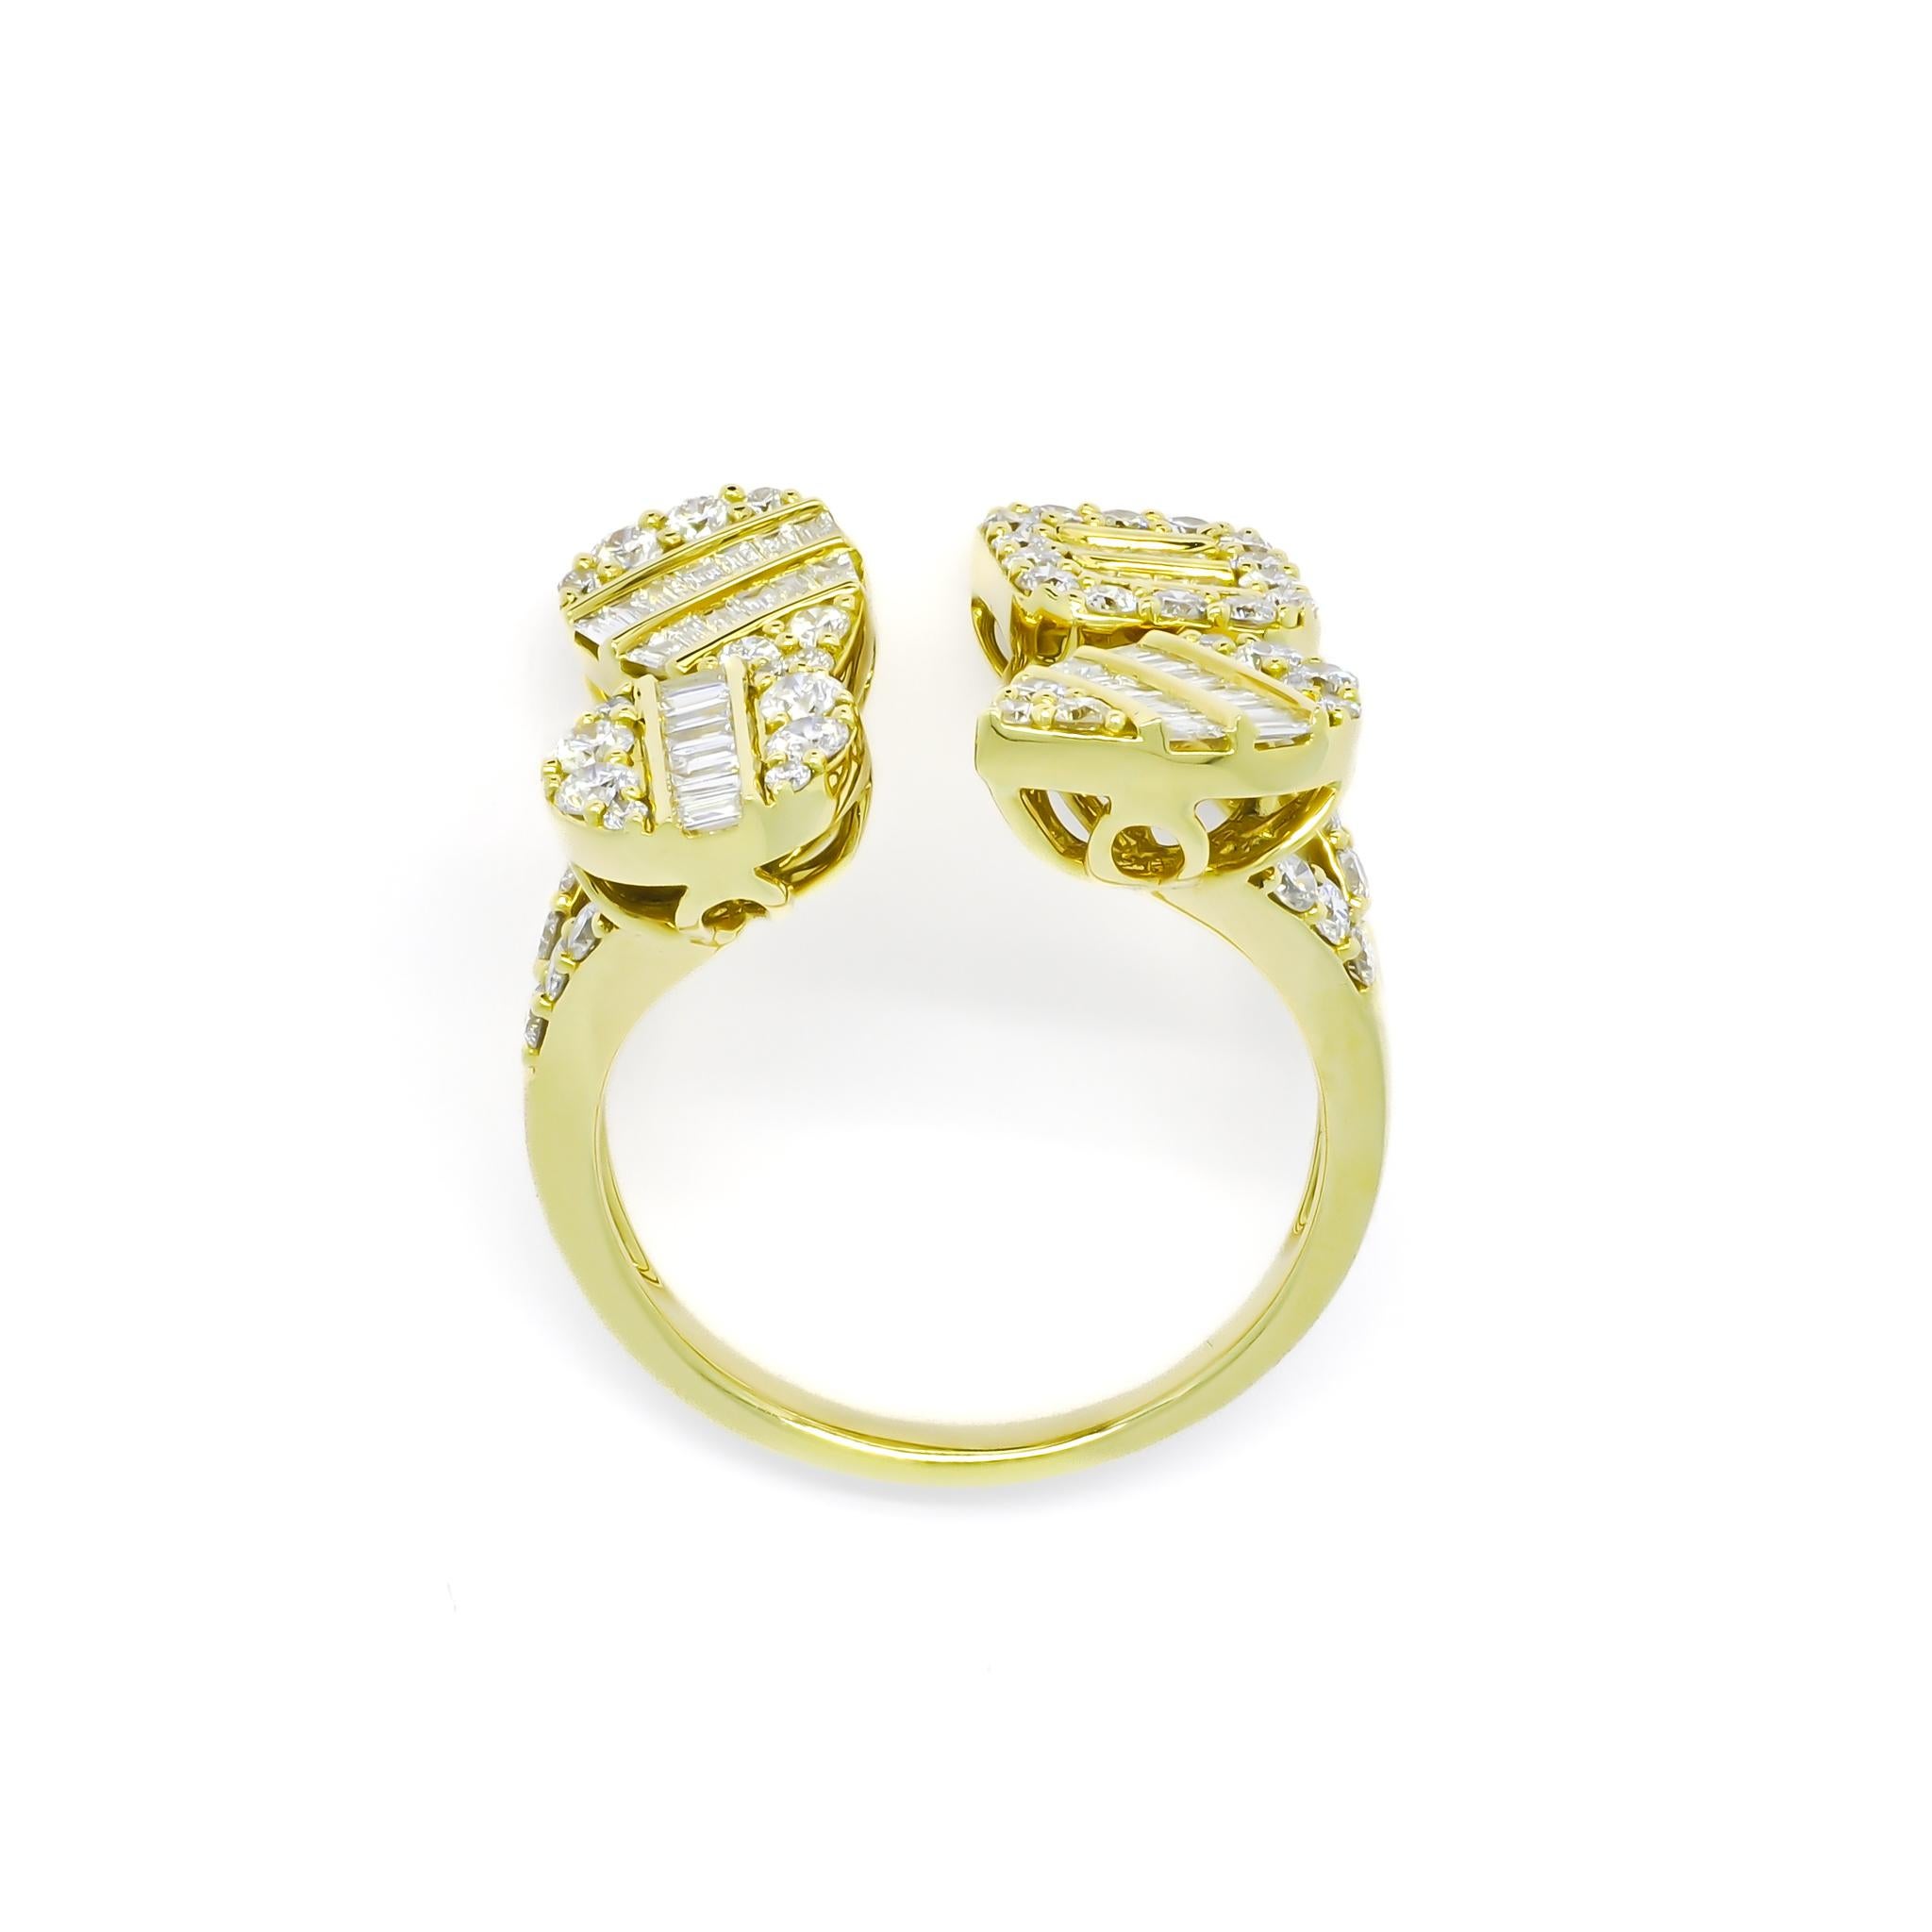 Modern Natural Diamond Ring 1.26 cts 18 Karat Yellow Gold High Fashion Statement Ring For Sale